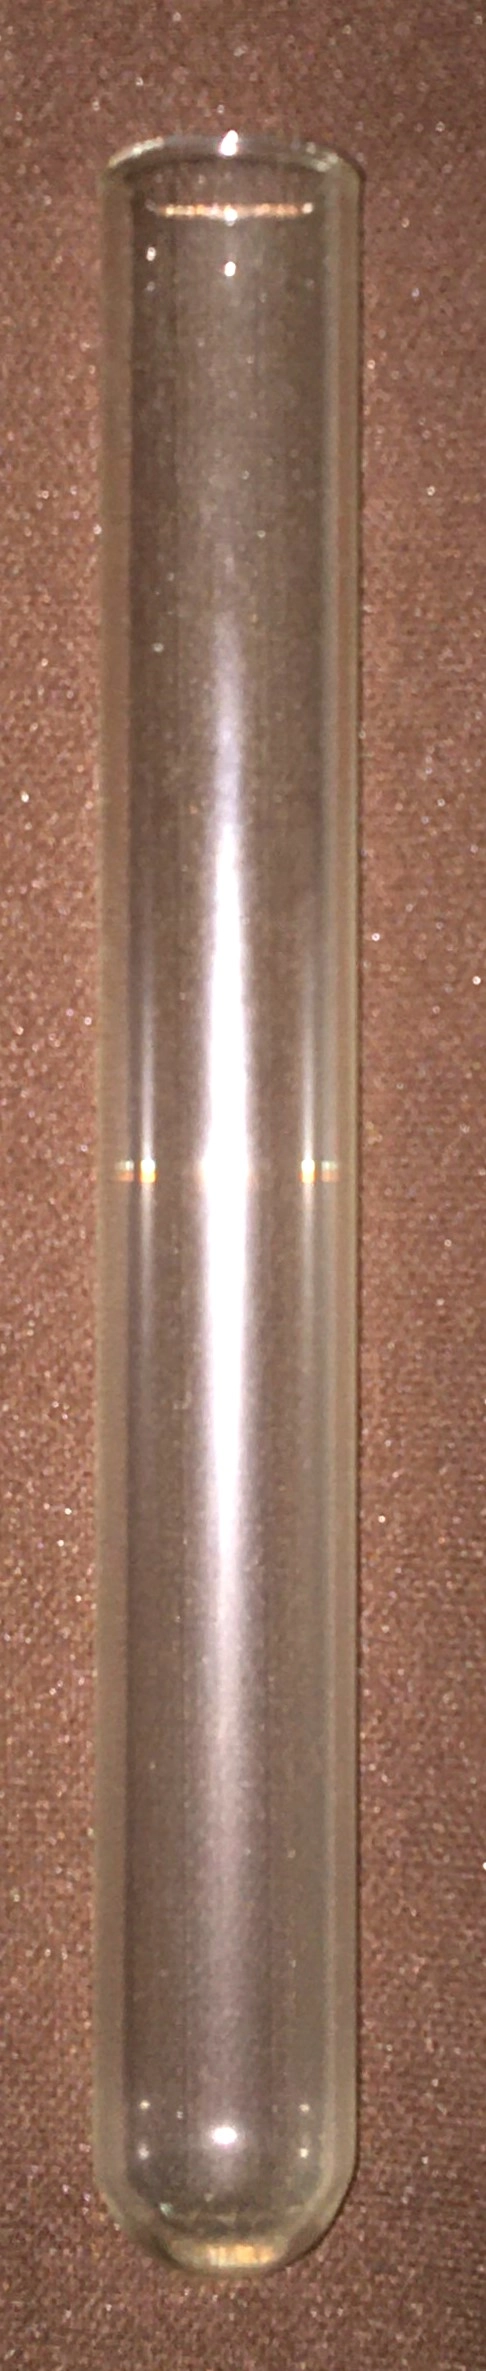 6 big NEW glass test tubes tube, Borosilicate (Pyrex equiv) large